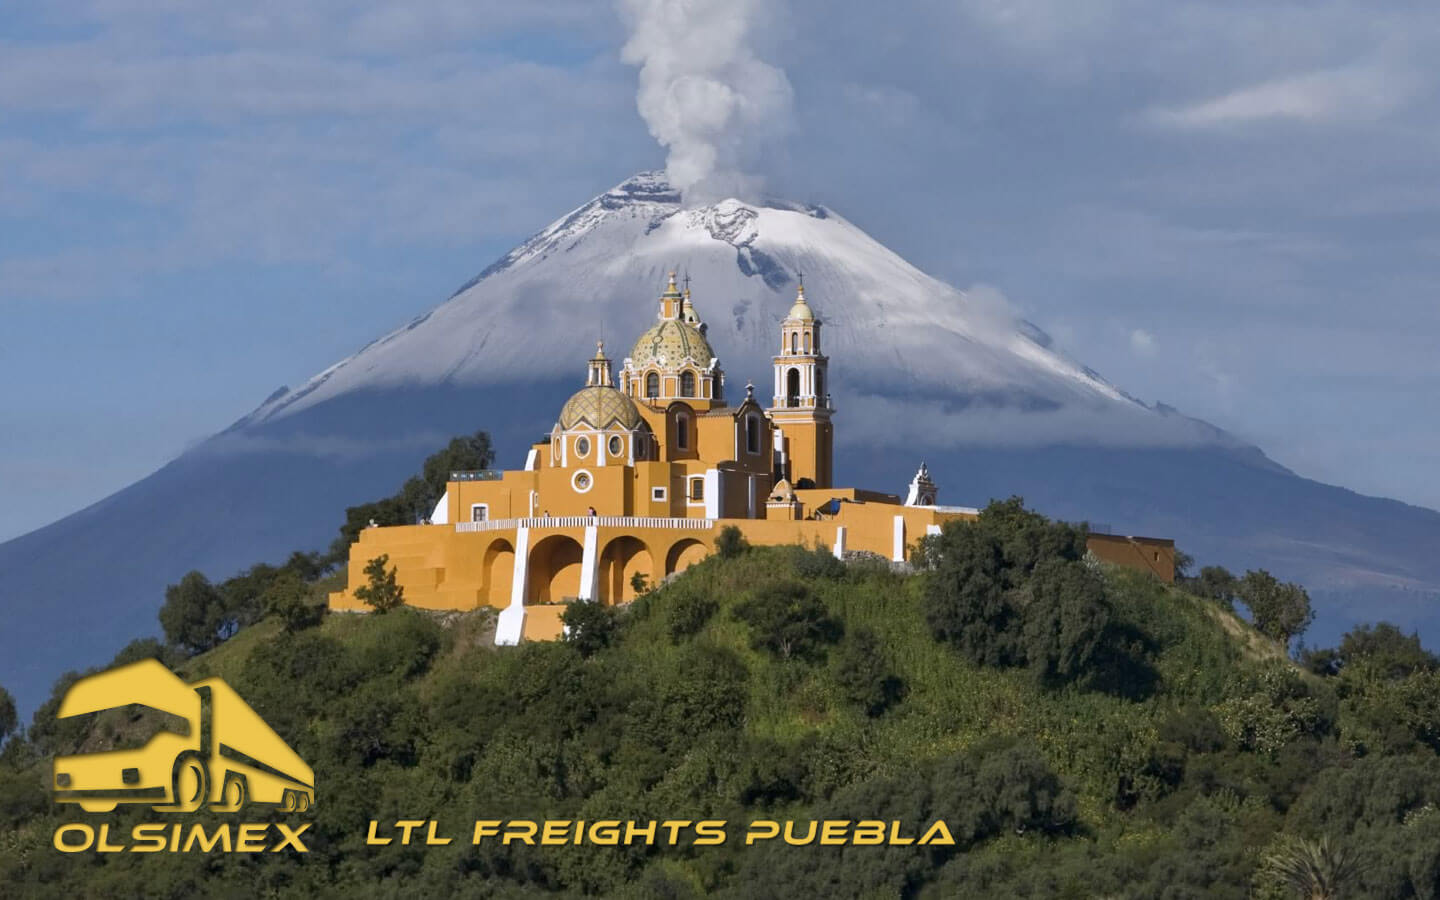 LTL Freights Puebla